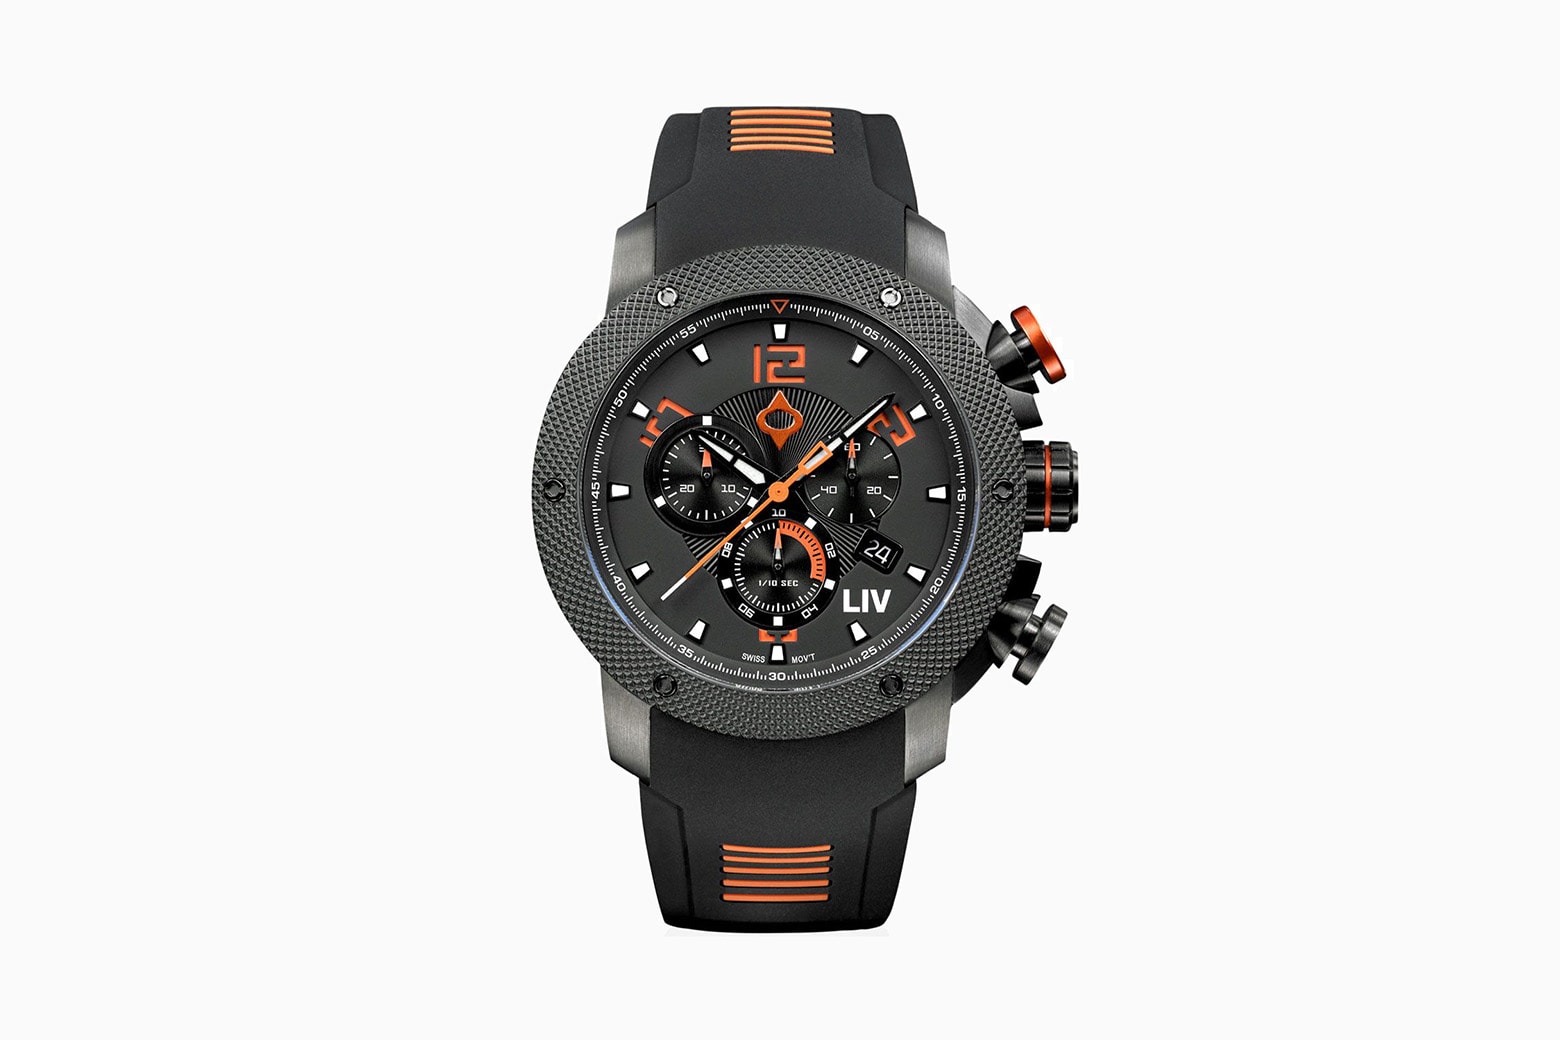 LIV watches deals discounts - Luxe Digital